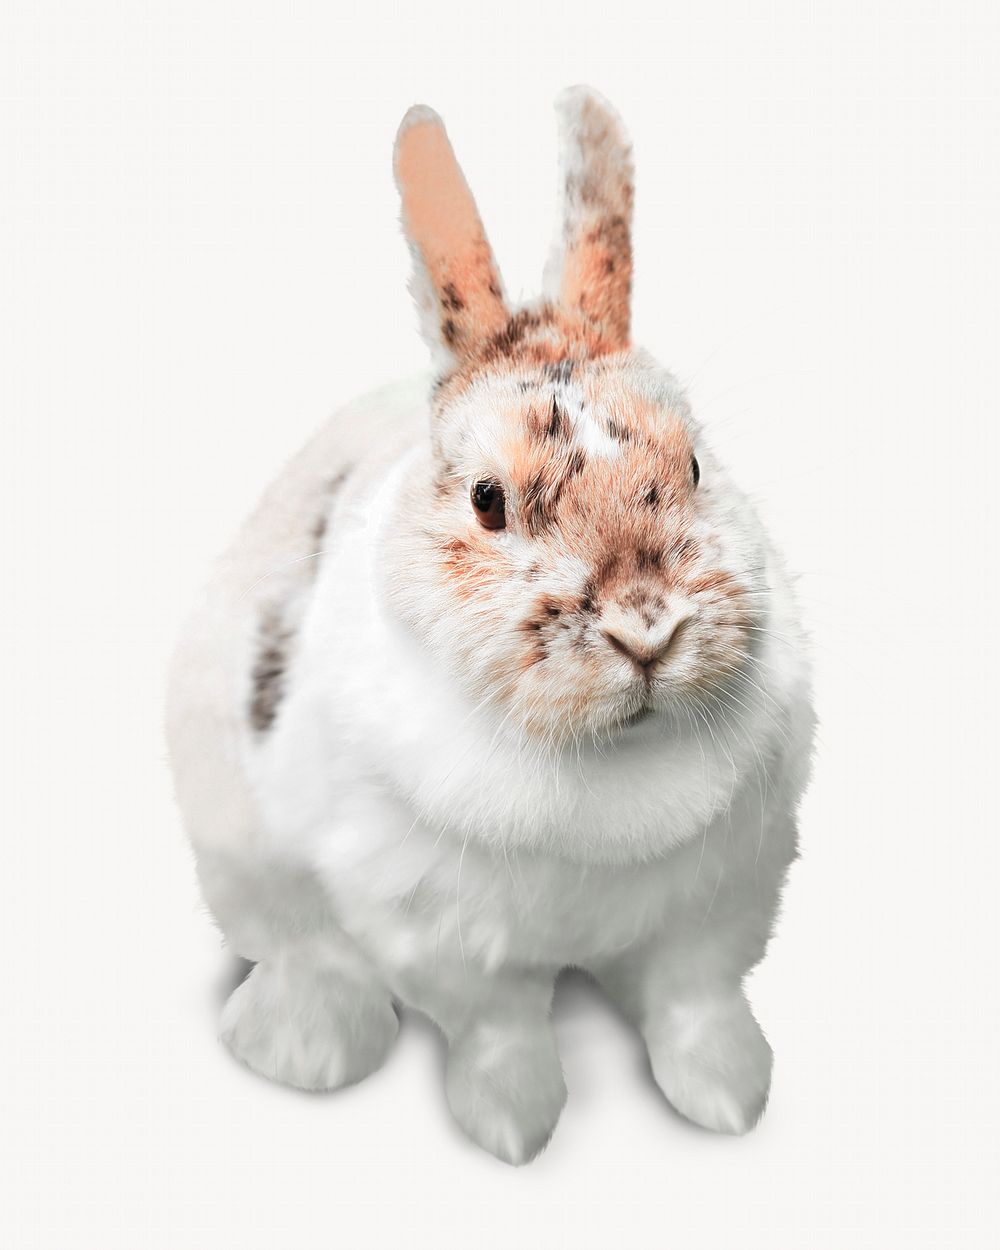 Cute rabbit isolated on white, animal design